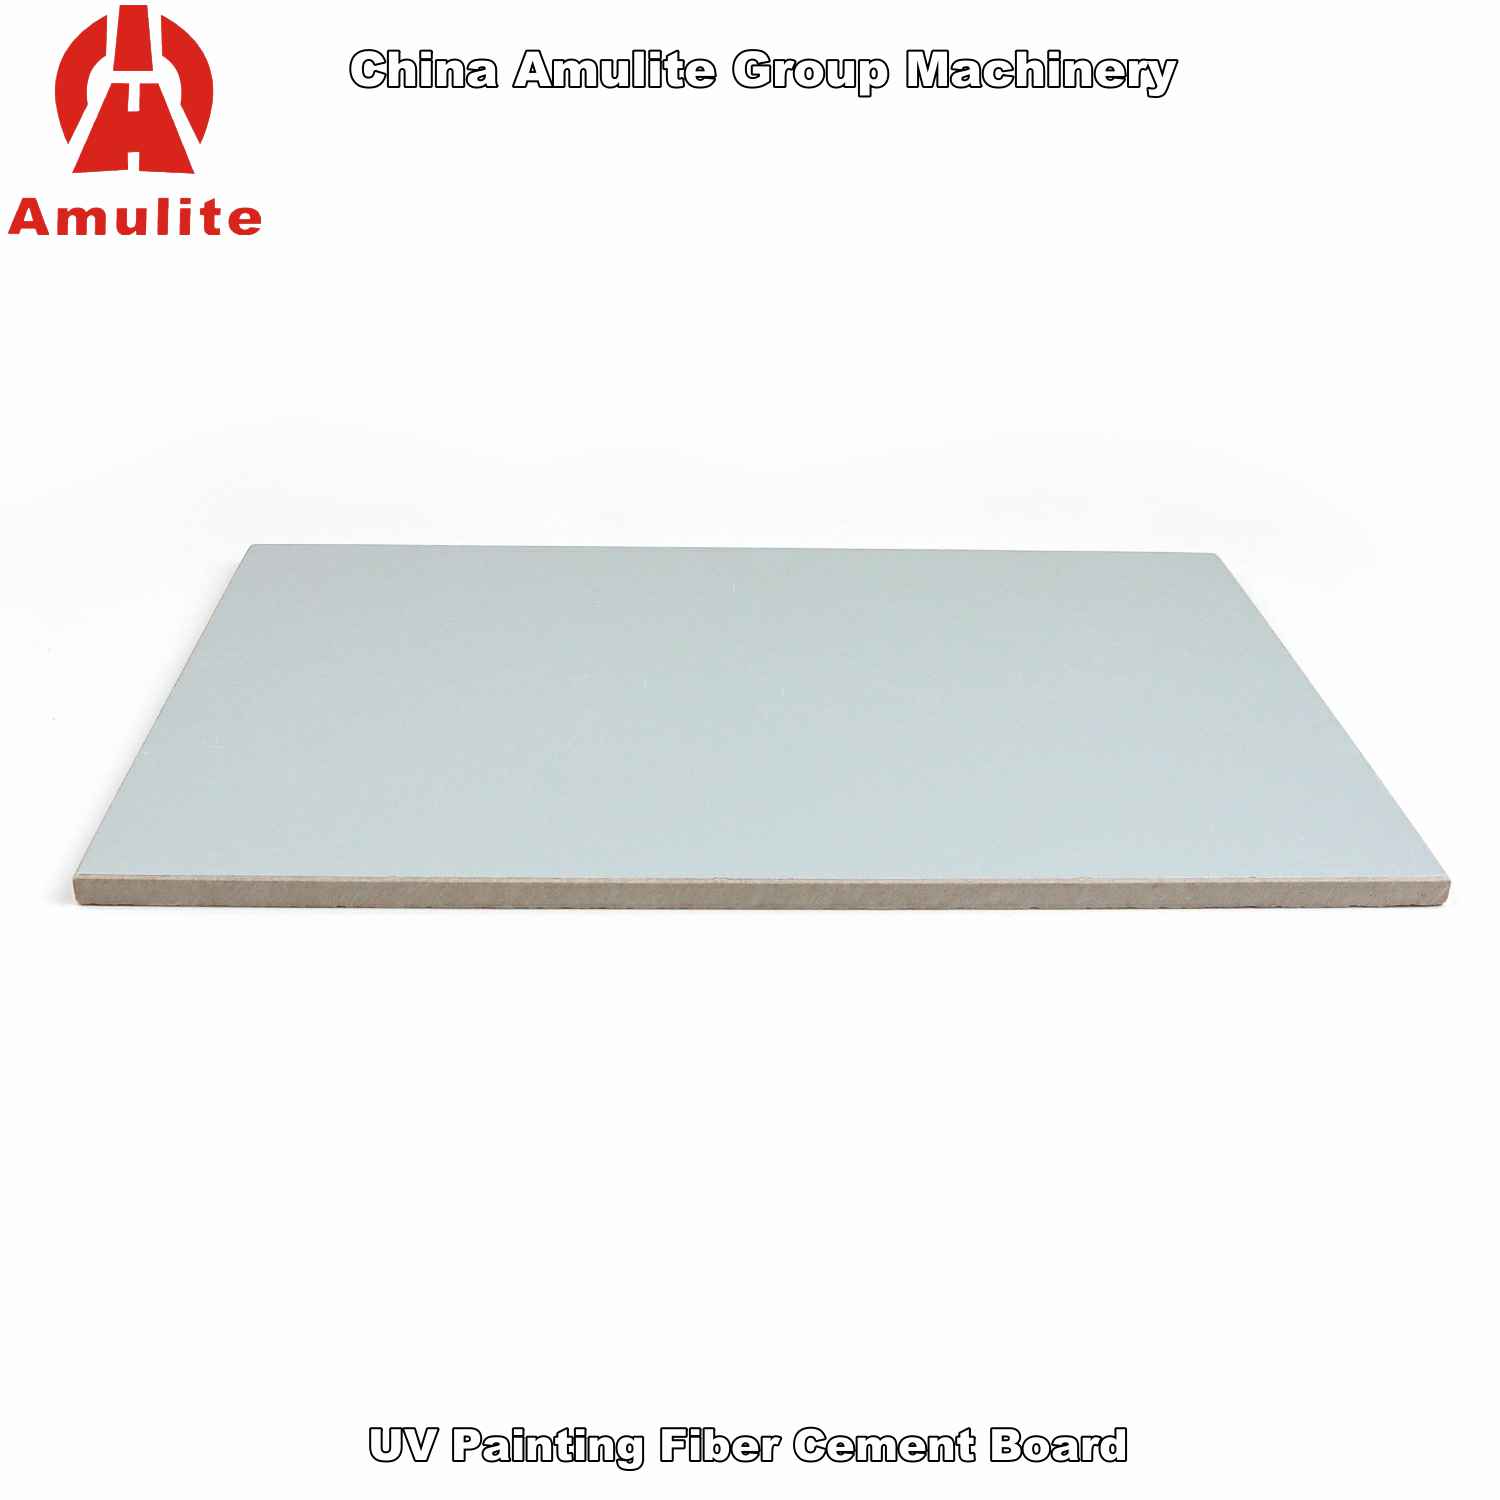 UV Painting Fiber Cement Board (20)